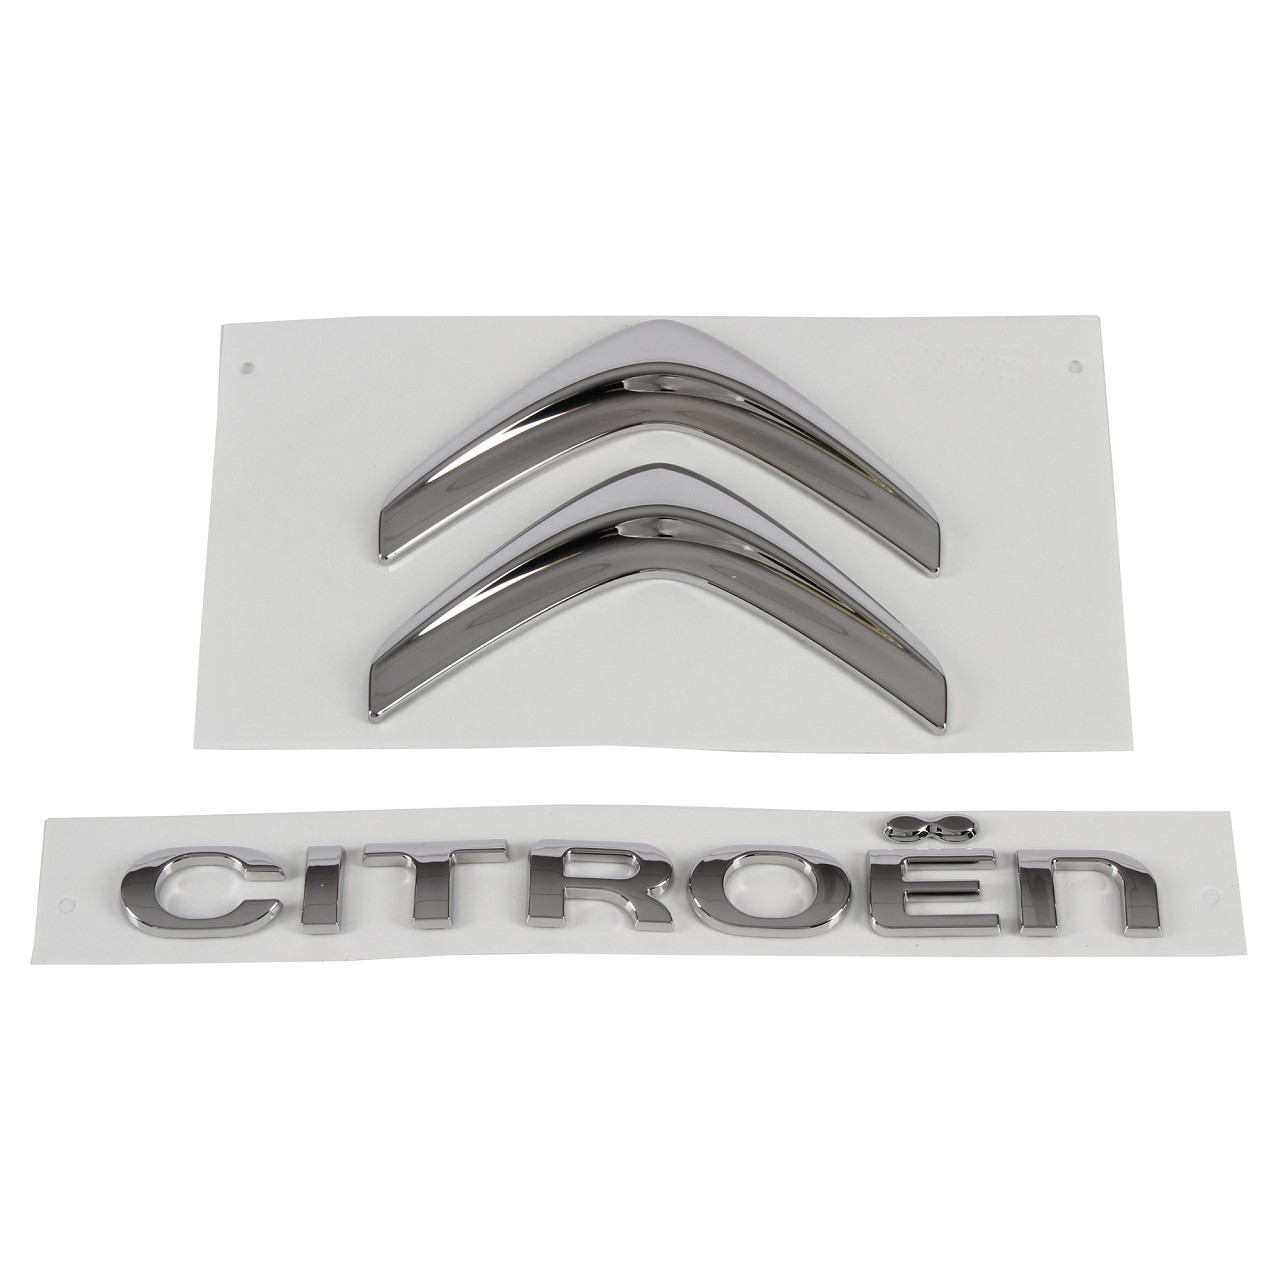 ORIGINAL Citroen Emblem Logo Schriftzug Heckklappe 98002860DX für C4 PICASSO II